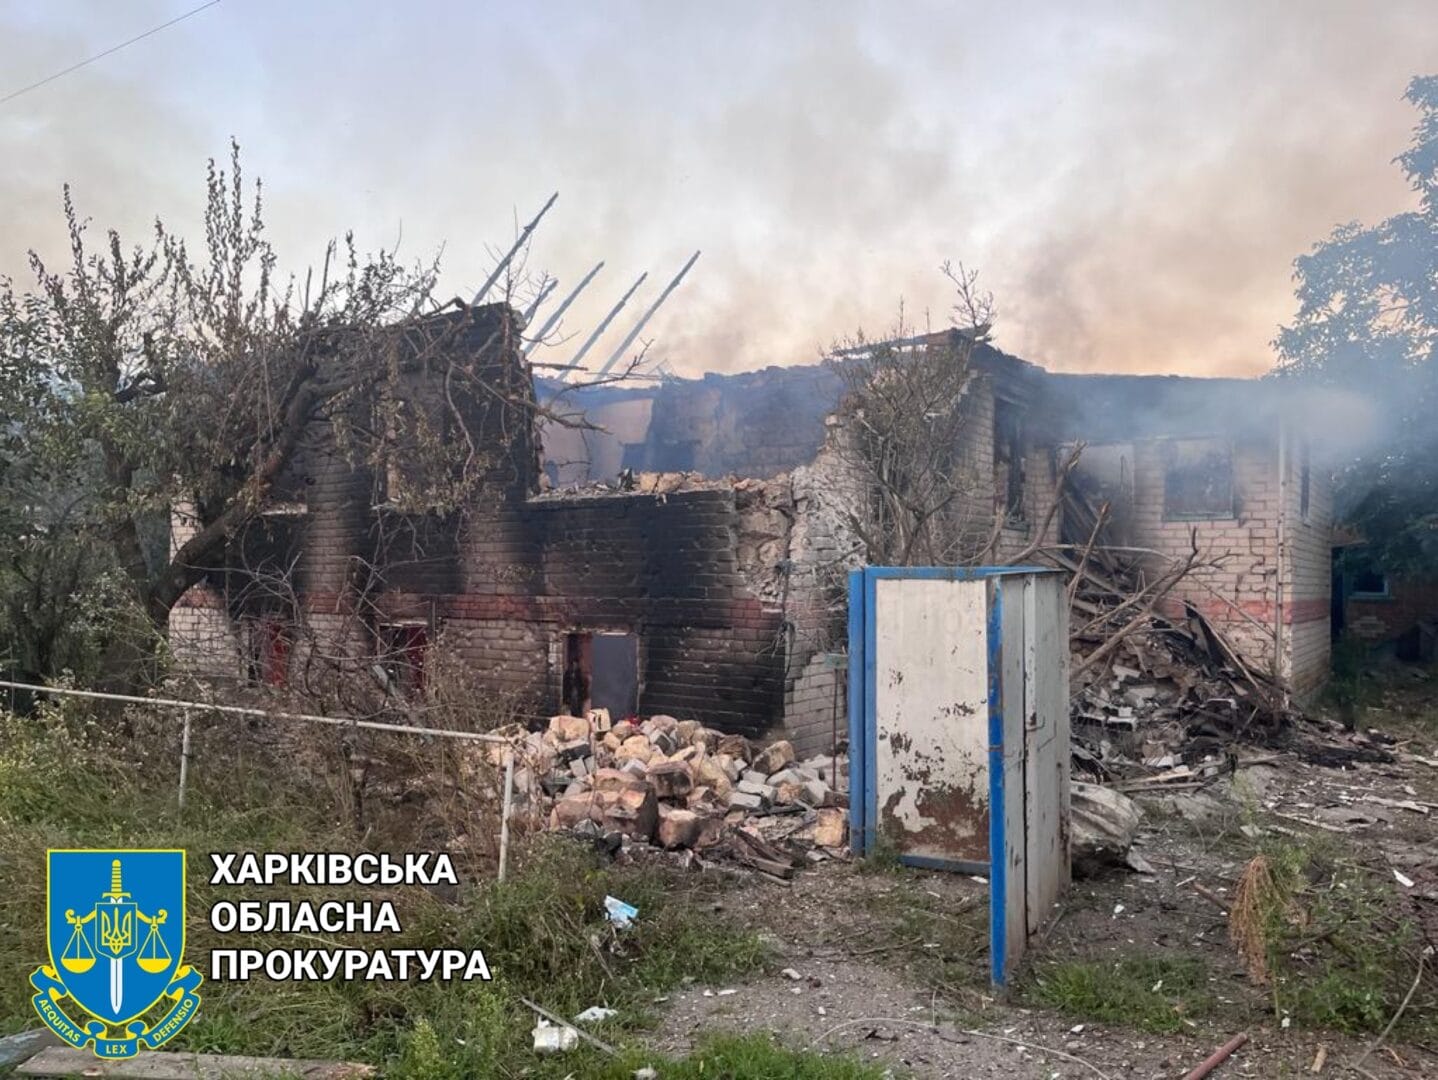 Destruction in the community/ source: Kharkiv Regional Prosecutor's Office